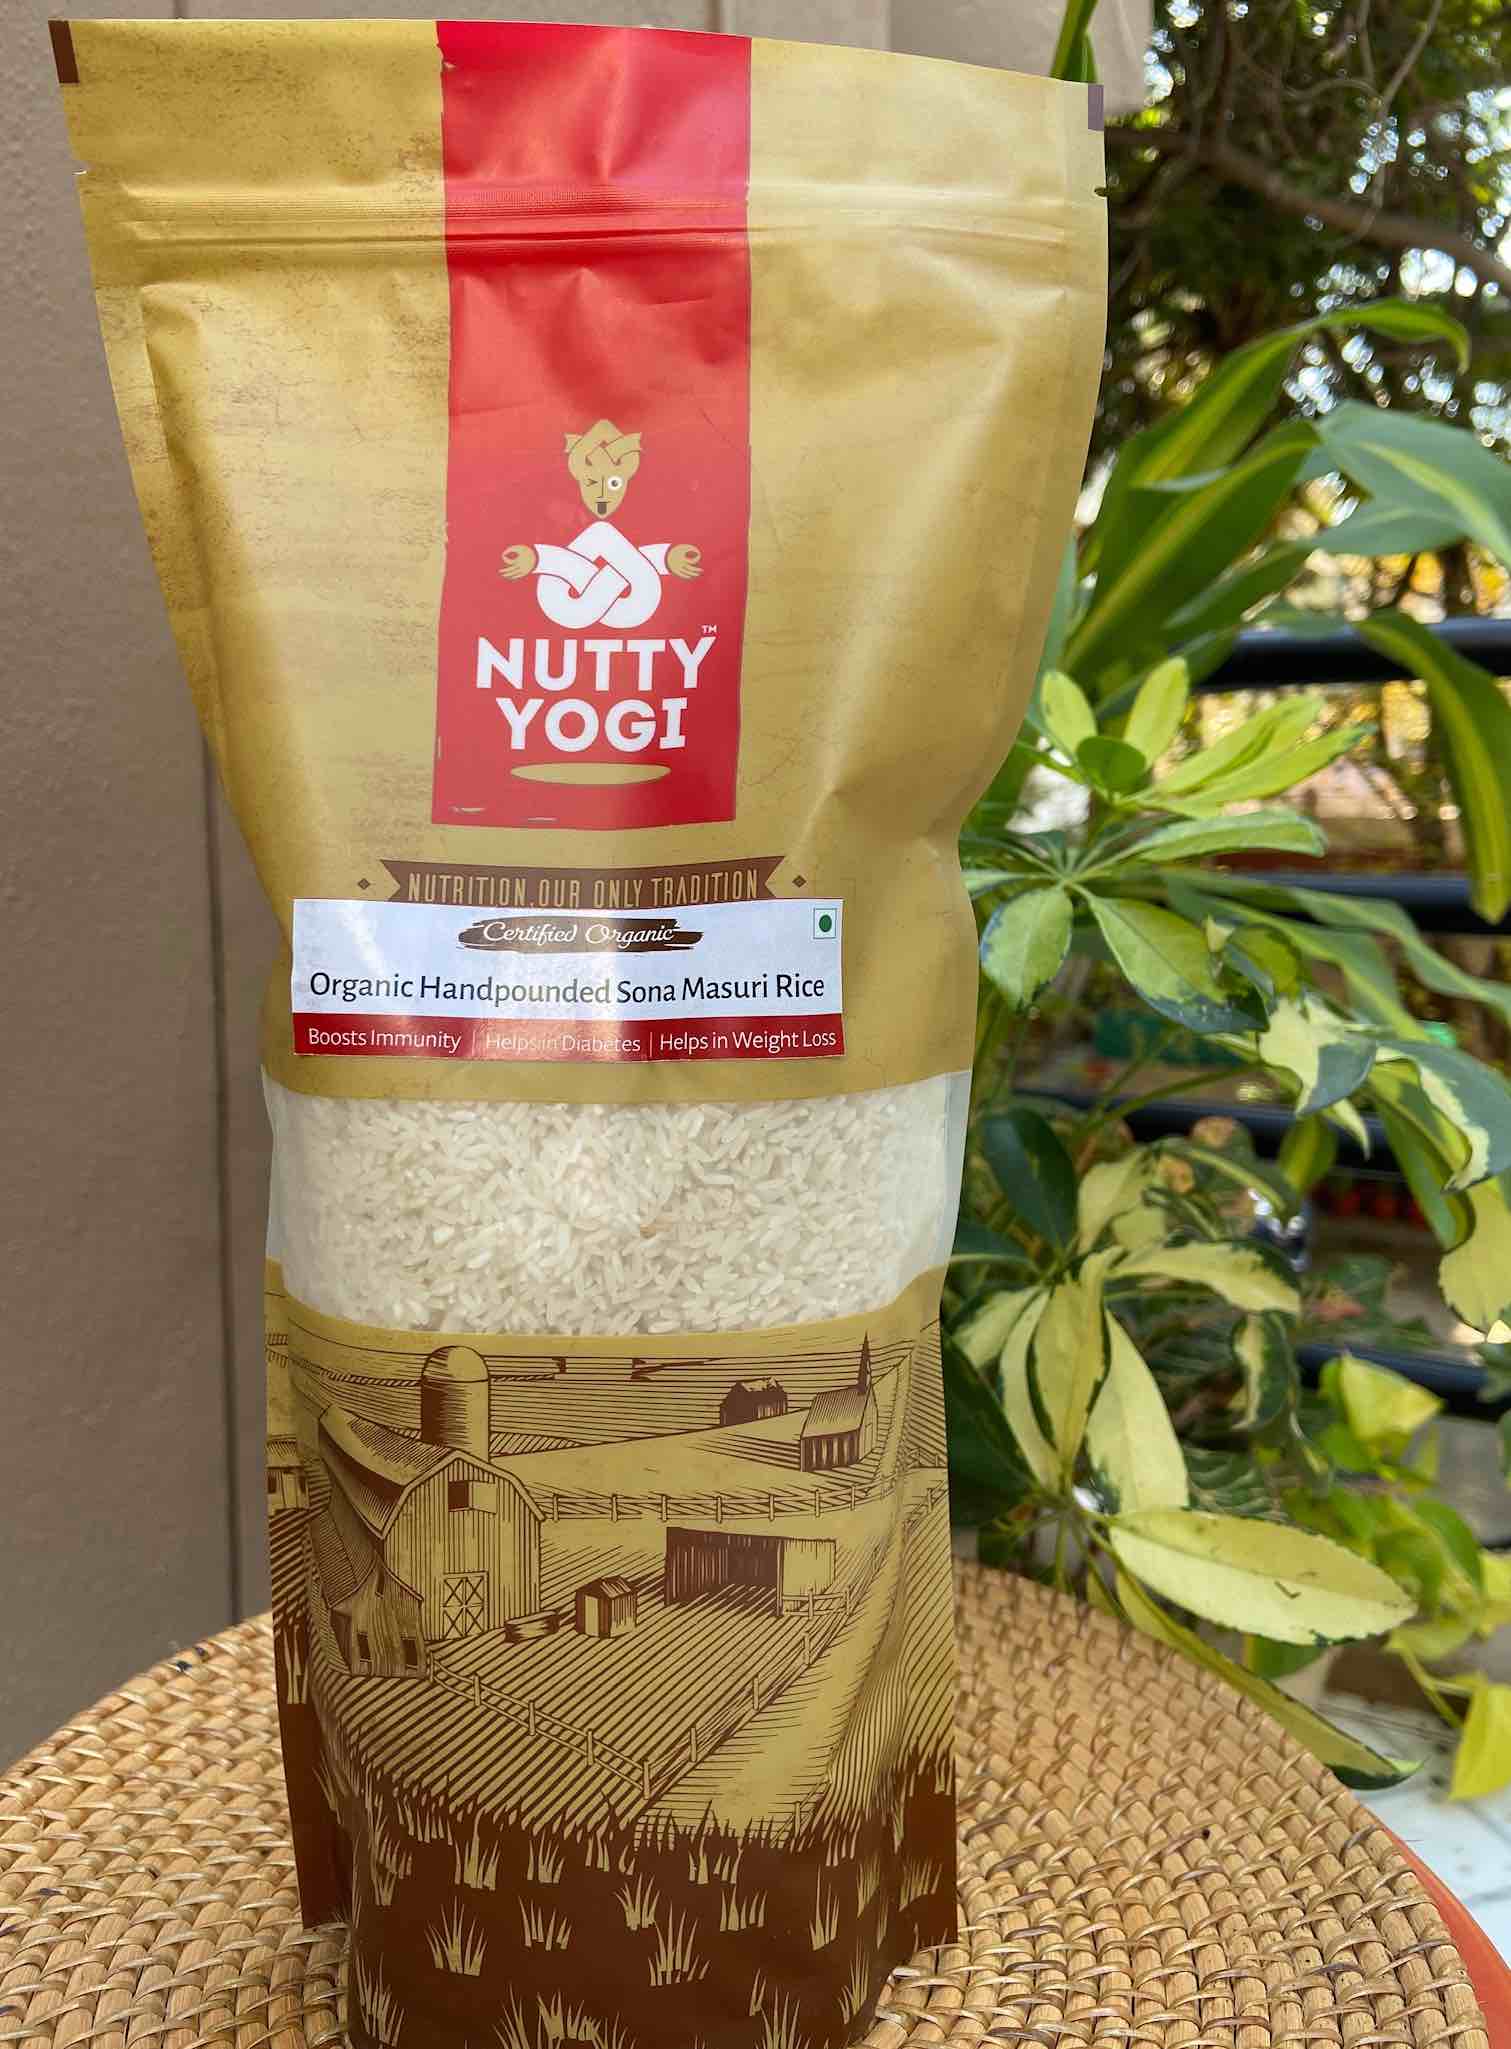 Nutty Yogi Organic Handpounded Sona Masoori Rice